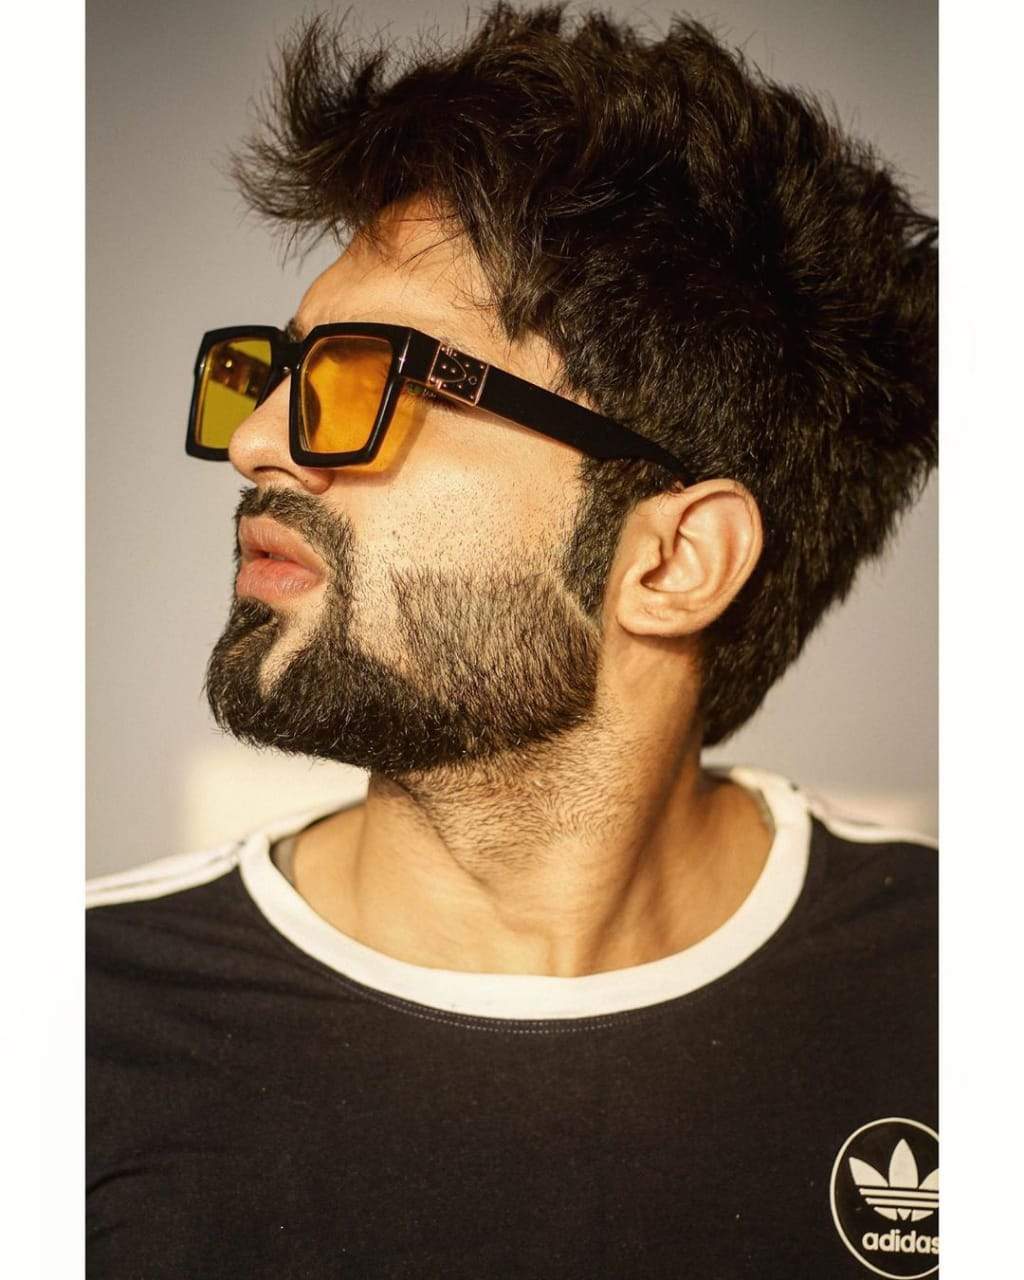 Badshah's most worn sunglasses